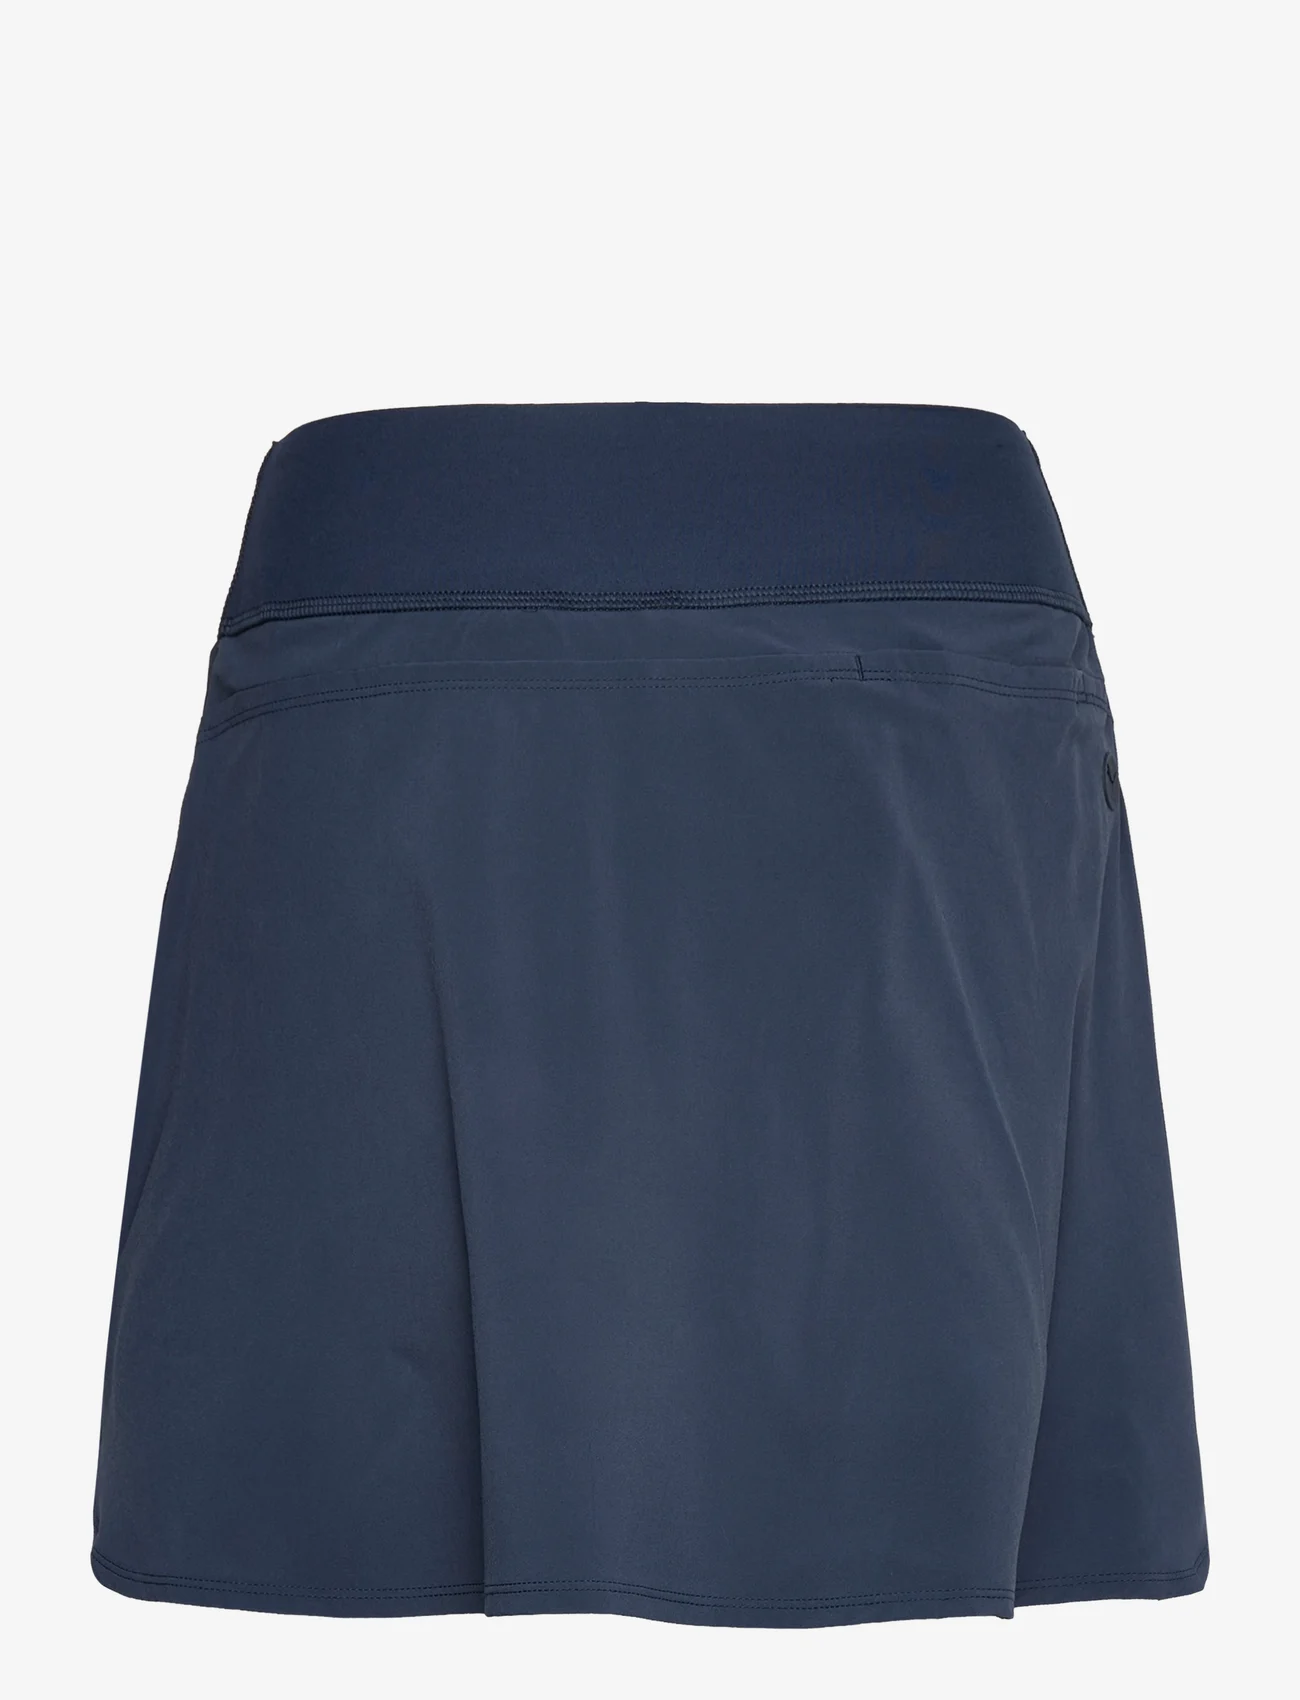 PUMA Golf - PWRSHAPE Solid Skirt - sijonai - navy blazer - 1